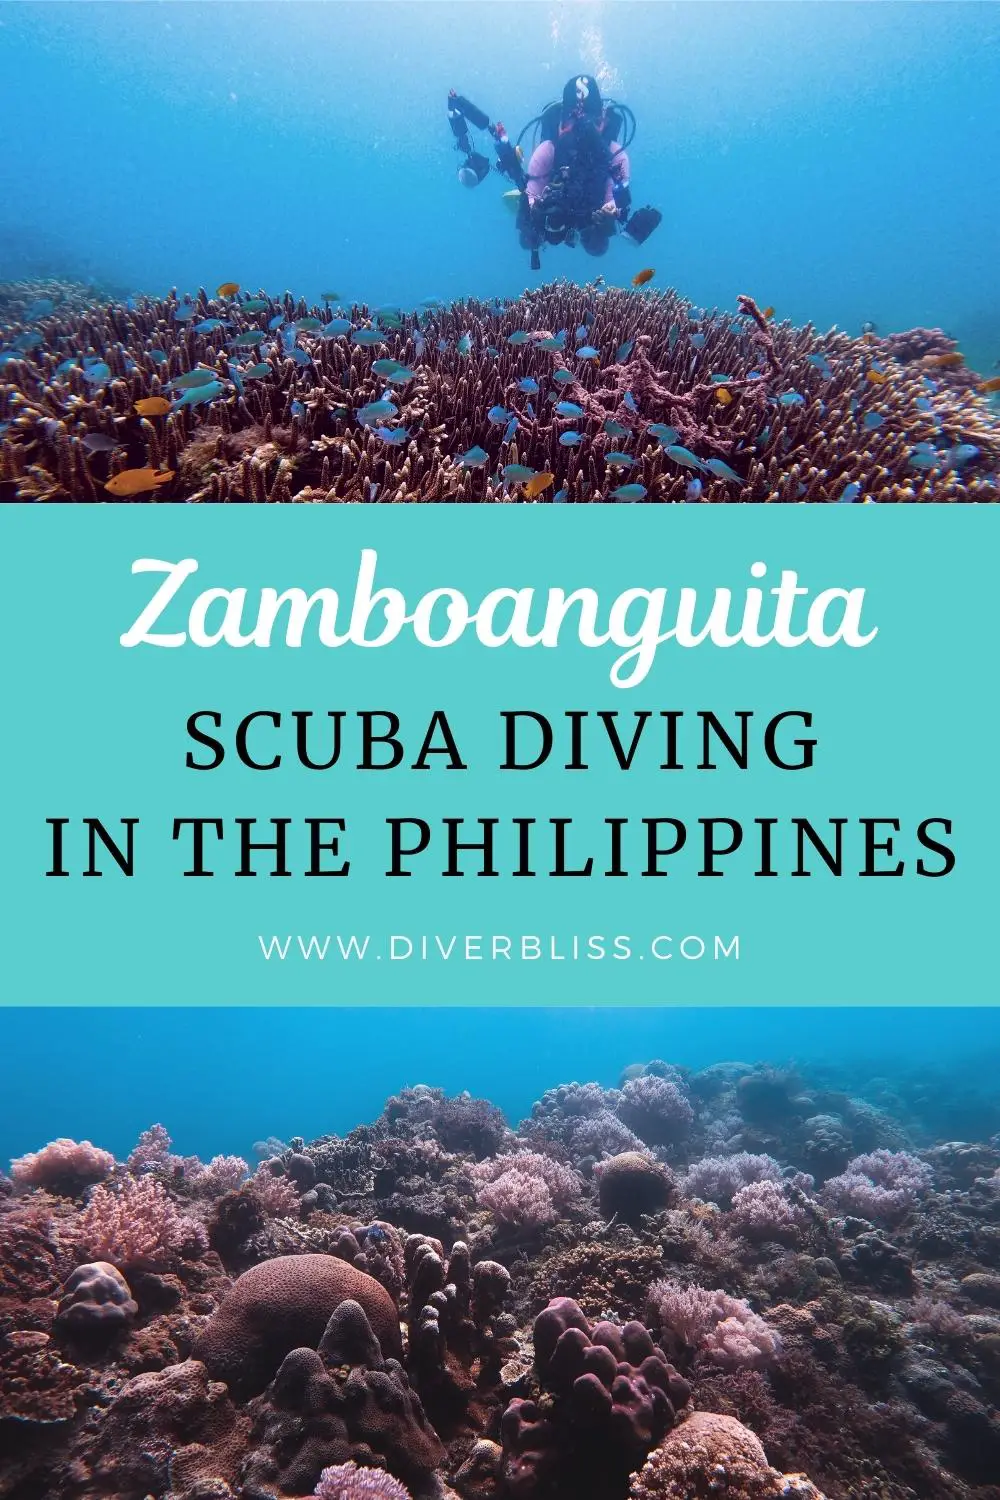 Zamboanguita scuba diving in the Philippines